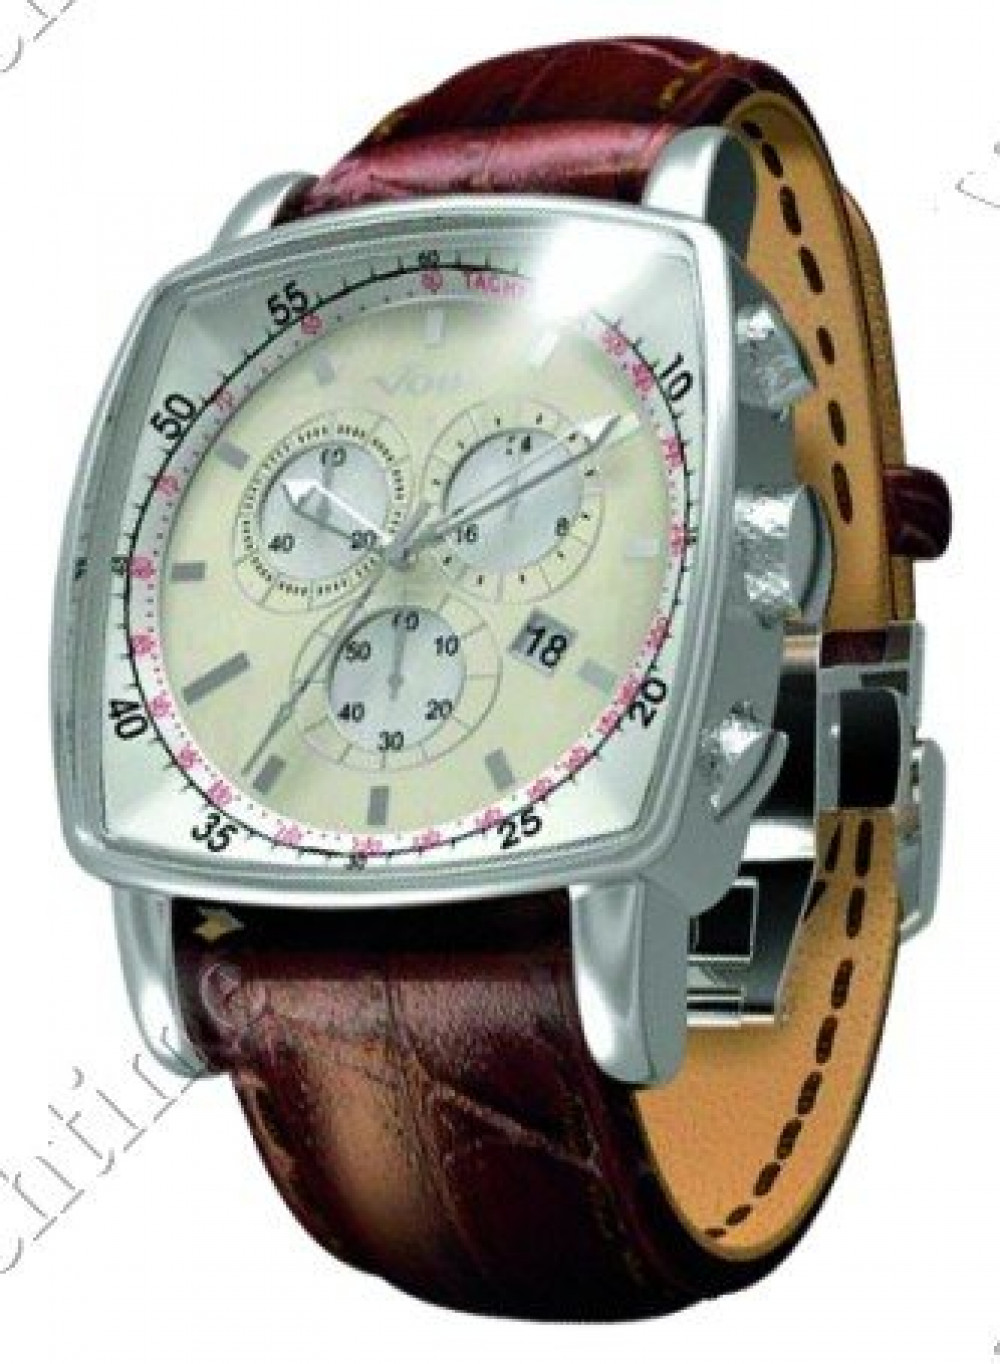 Zegarek firmy voila, model Chevalier